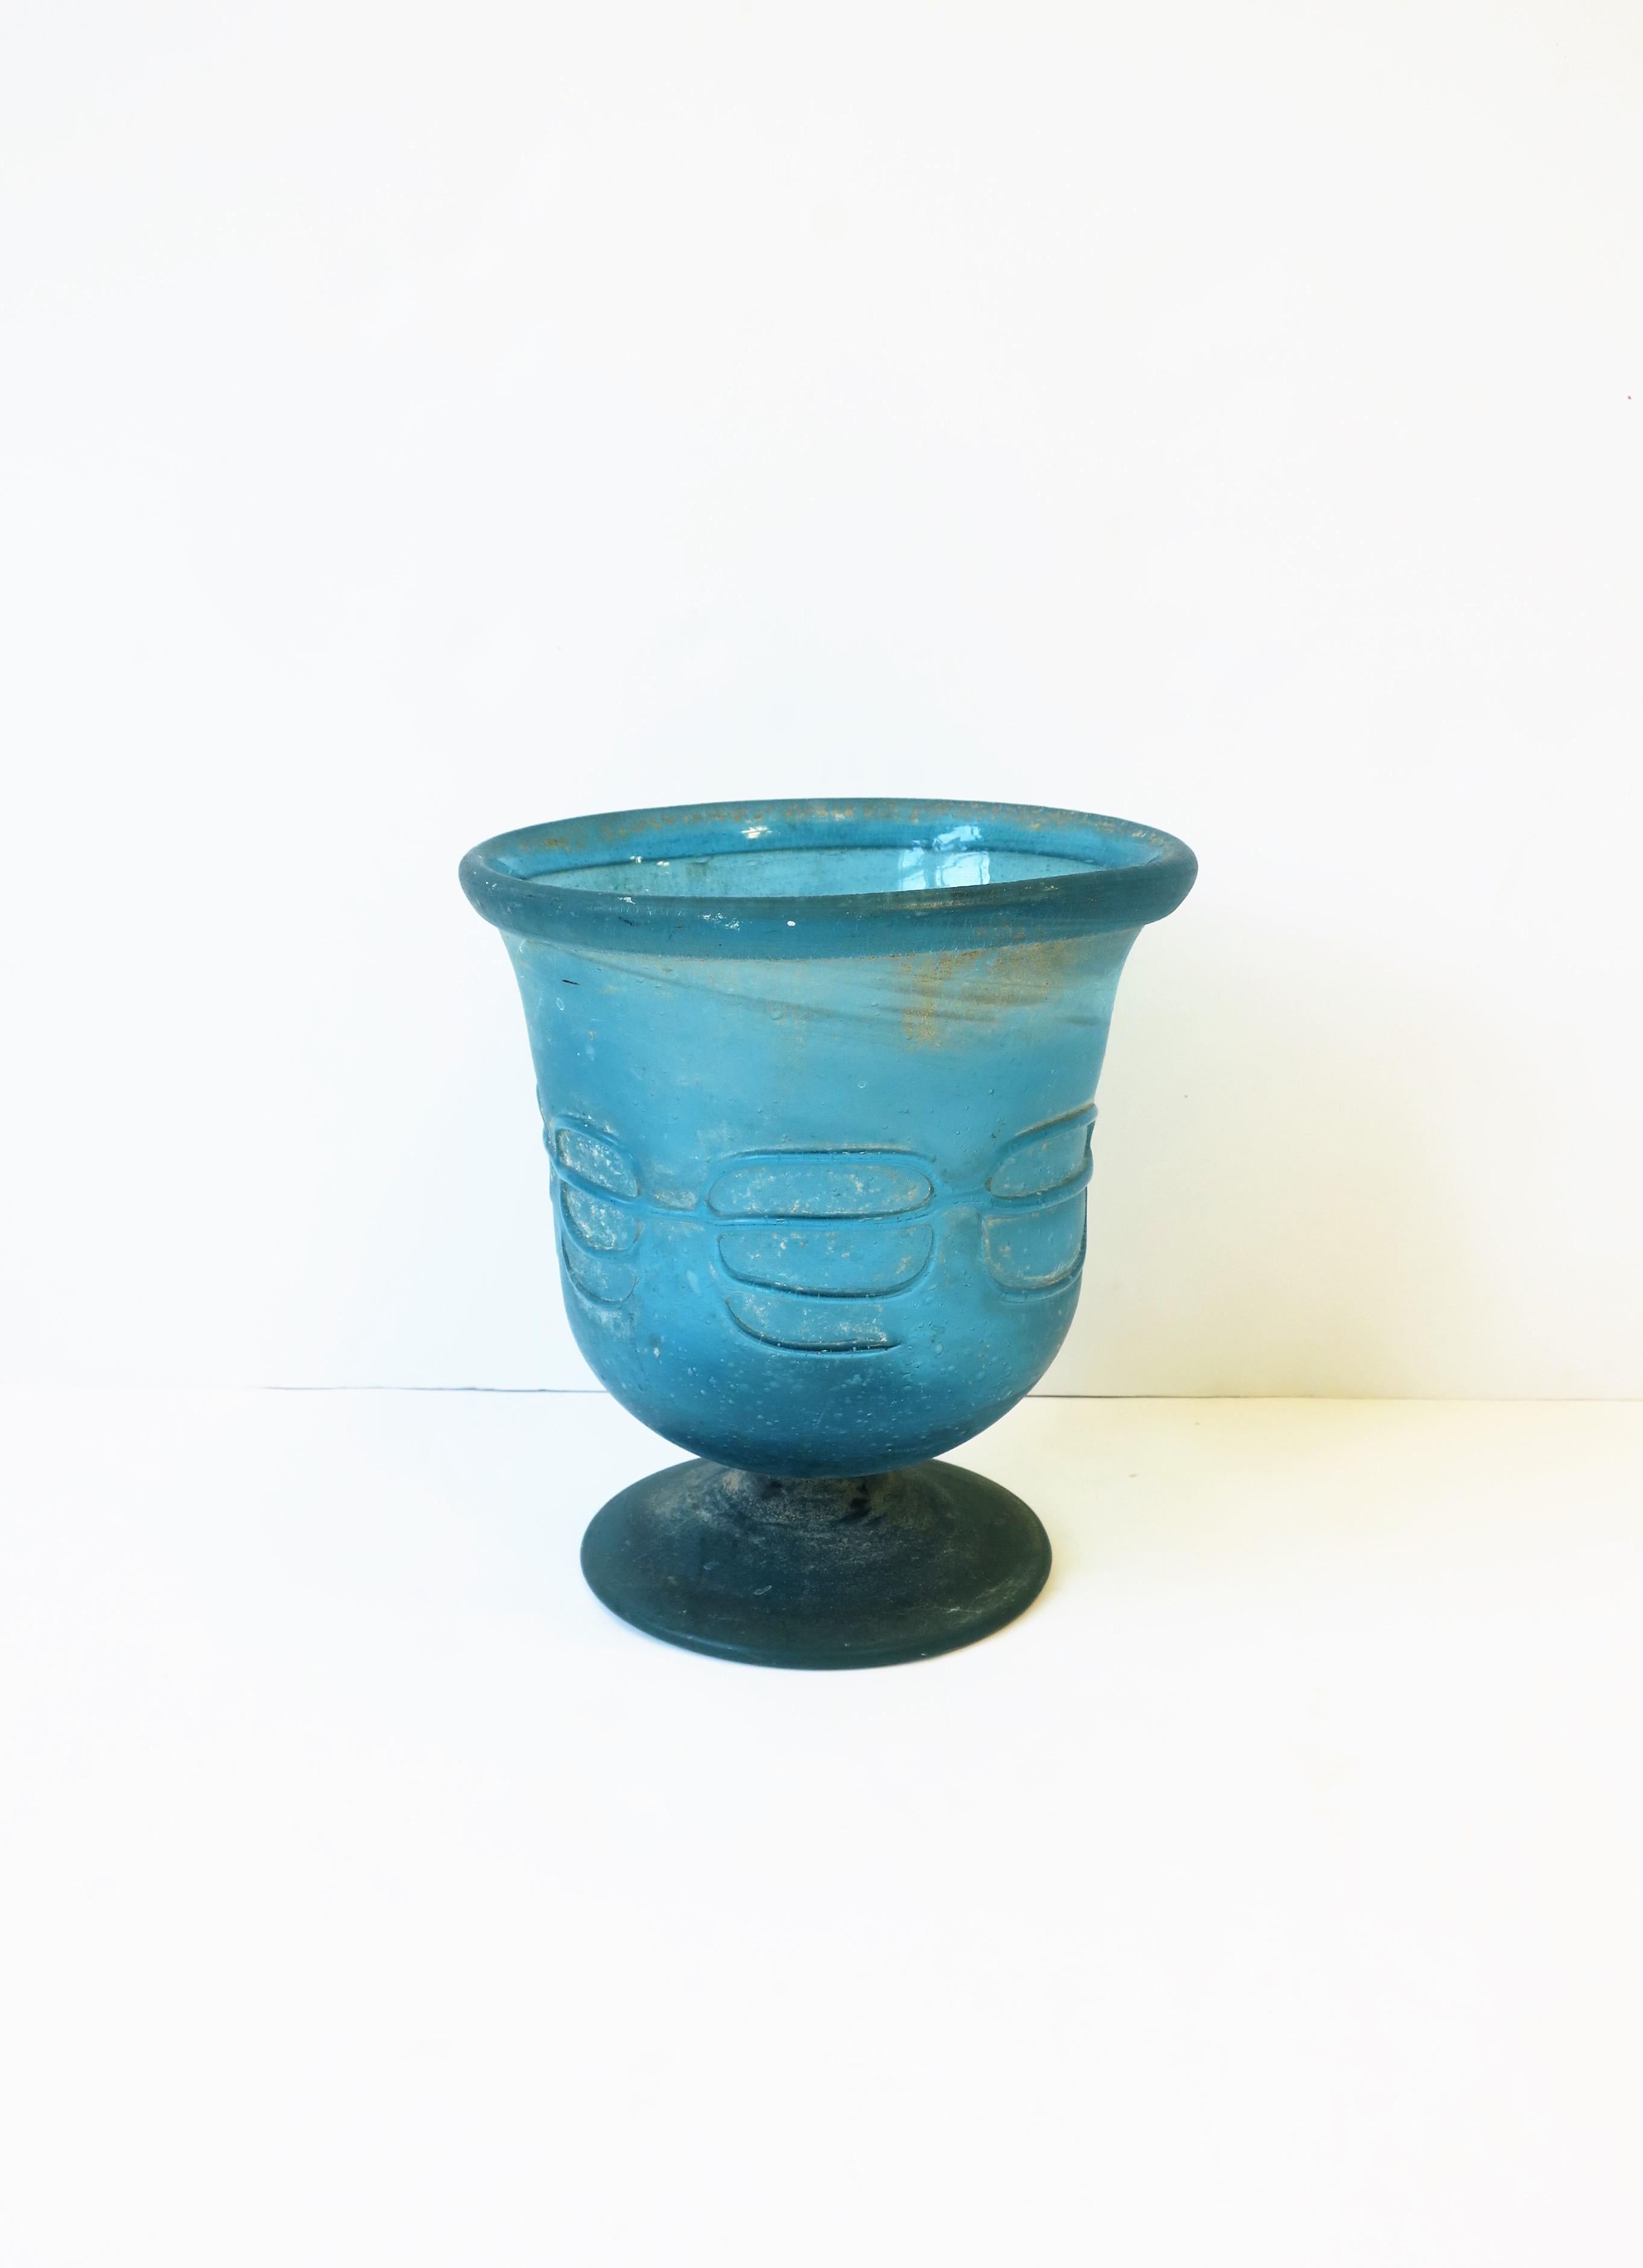 Unglazed Postmodern Italian Scavo Blue Art Glass Urn Vase Vessel